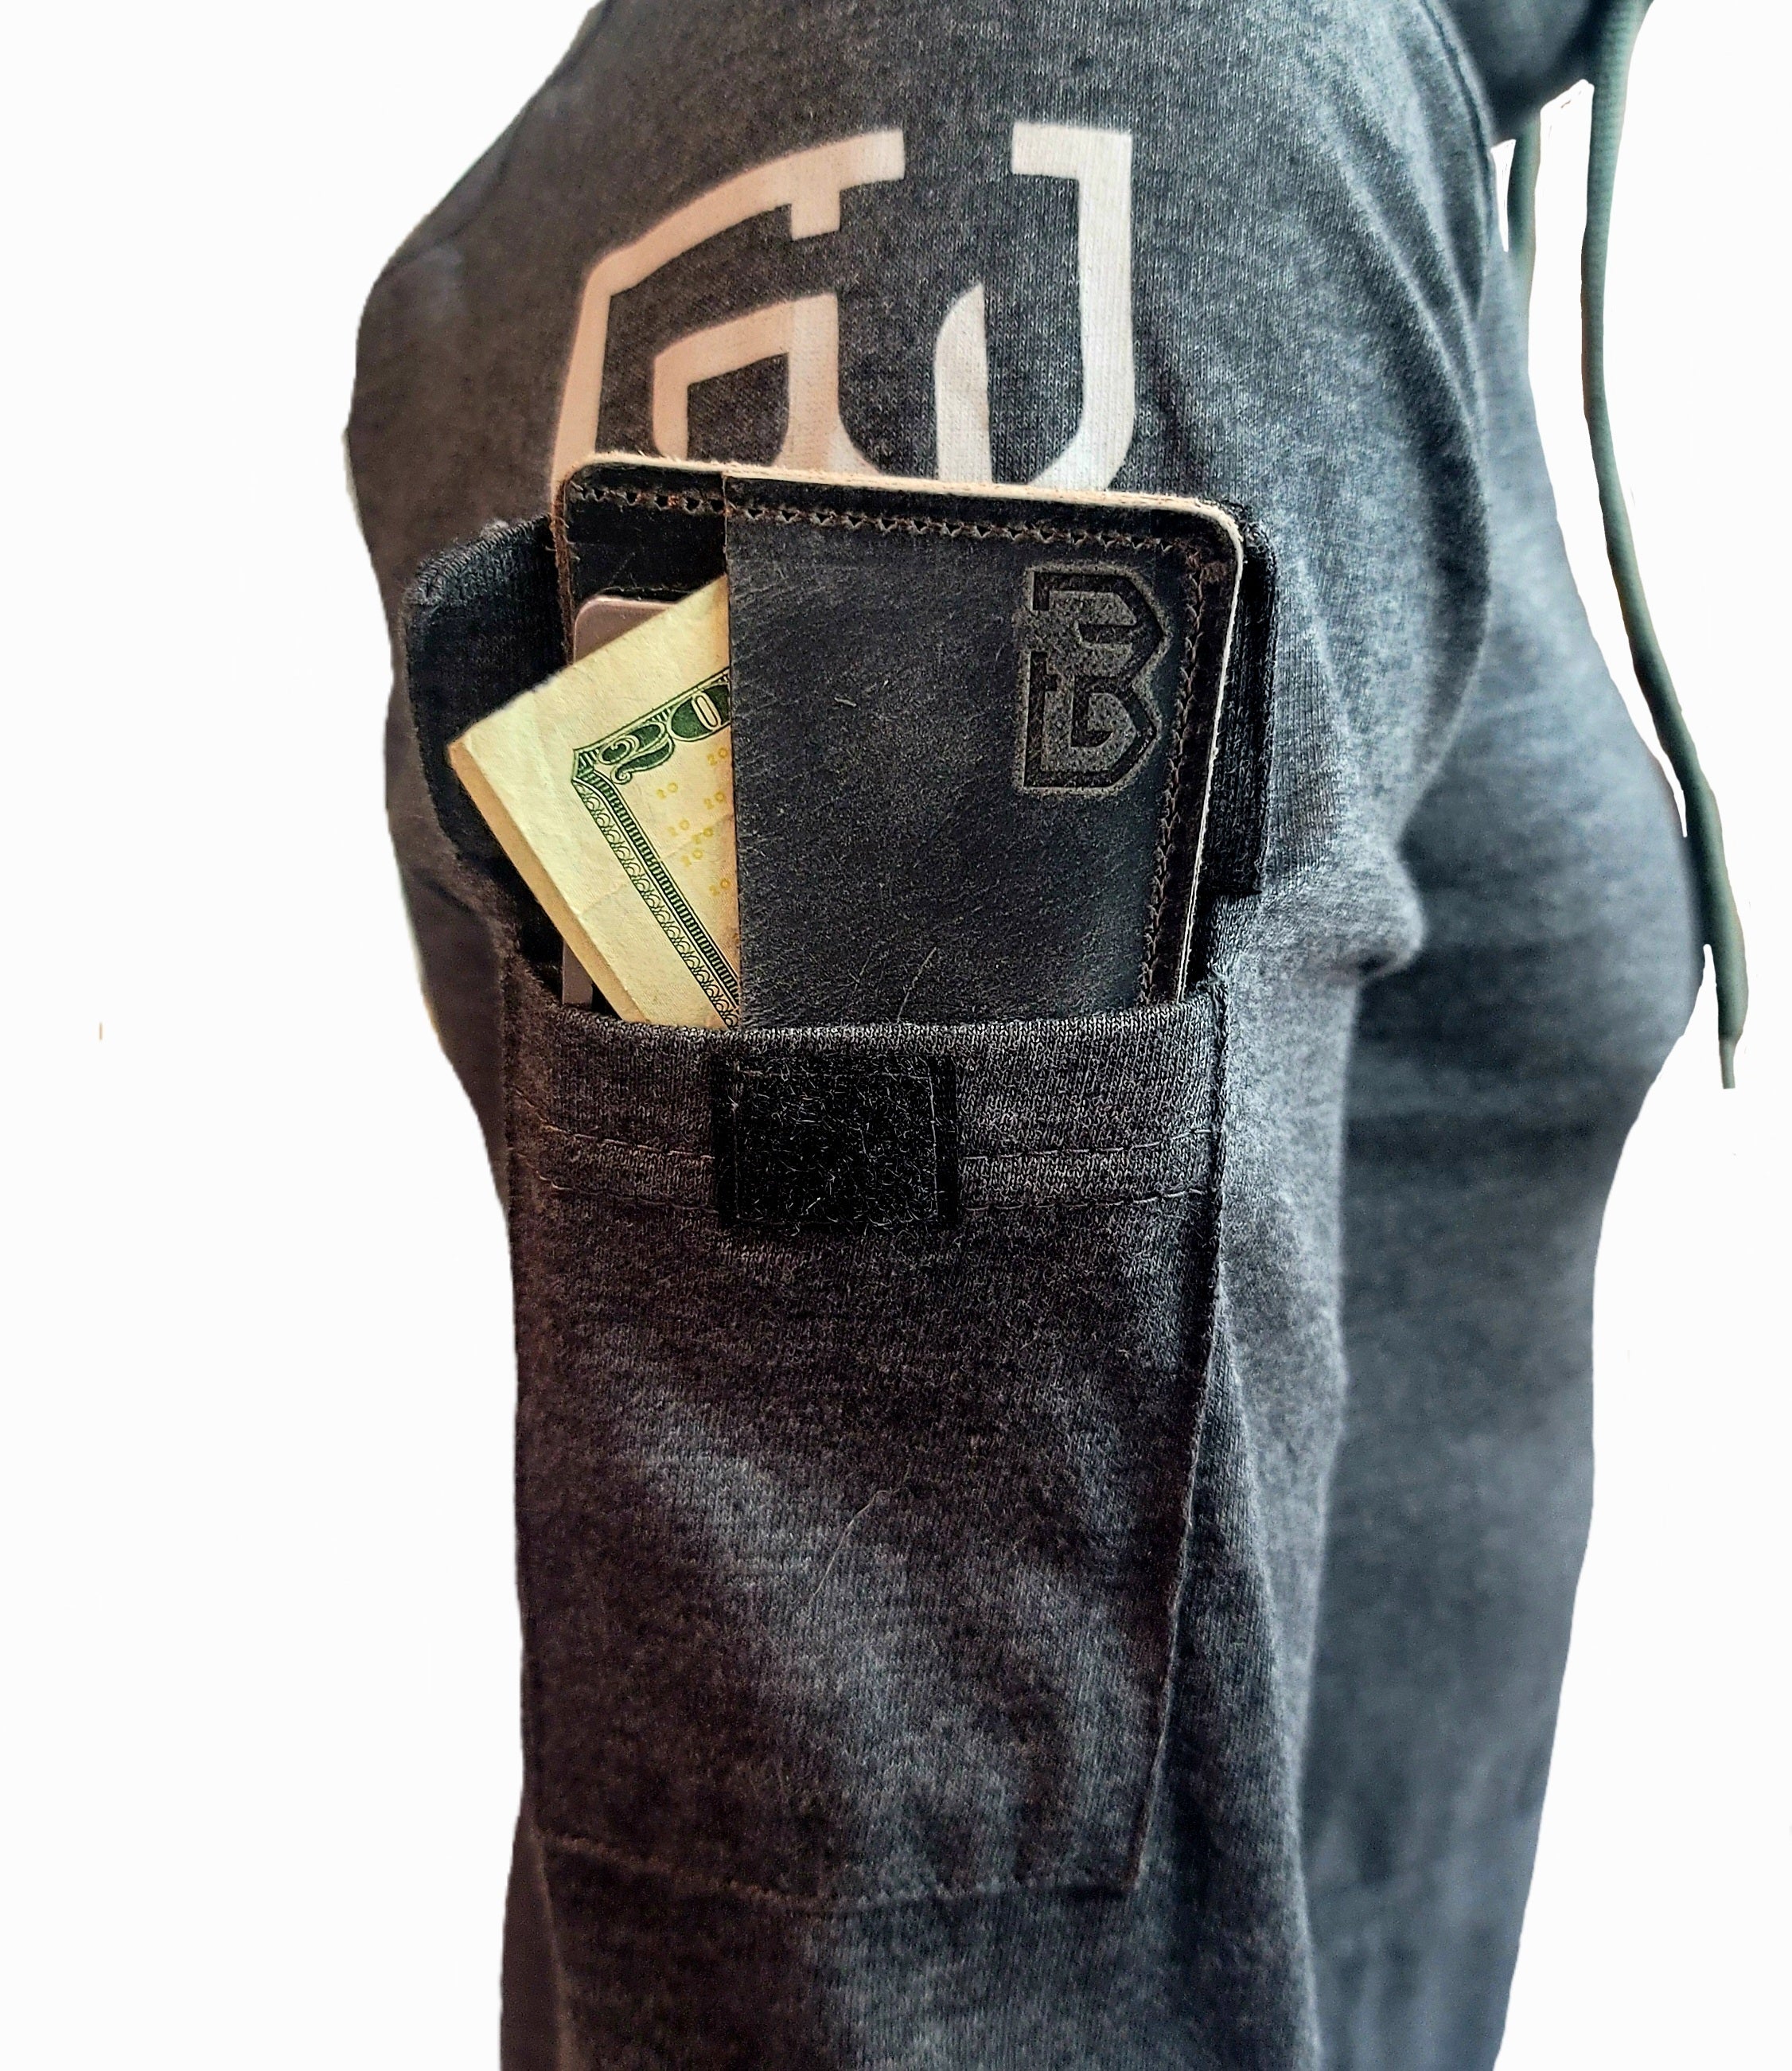 Tee Shirt Hoodie with hidden pockets EDC hoodie with secret pocket